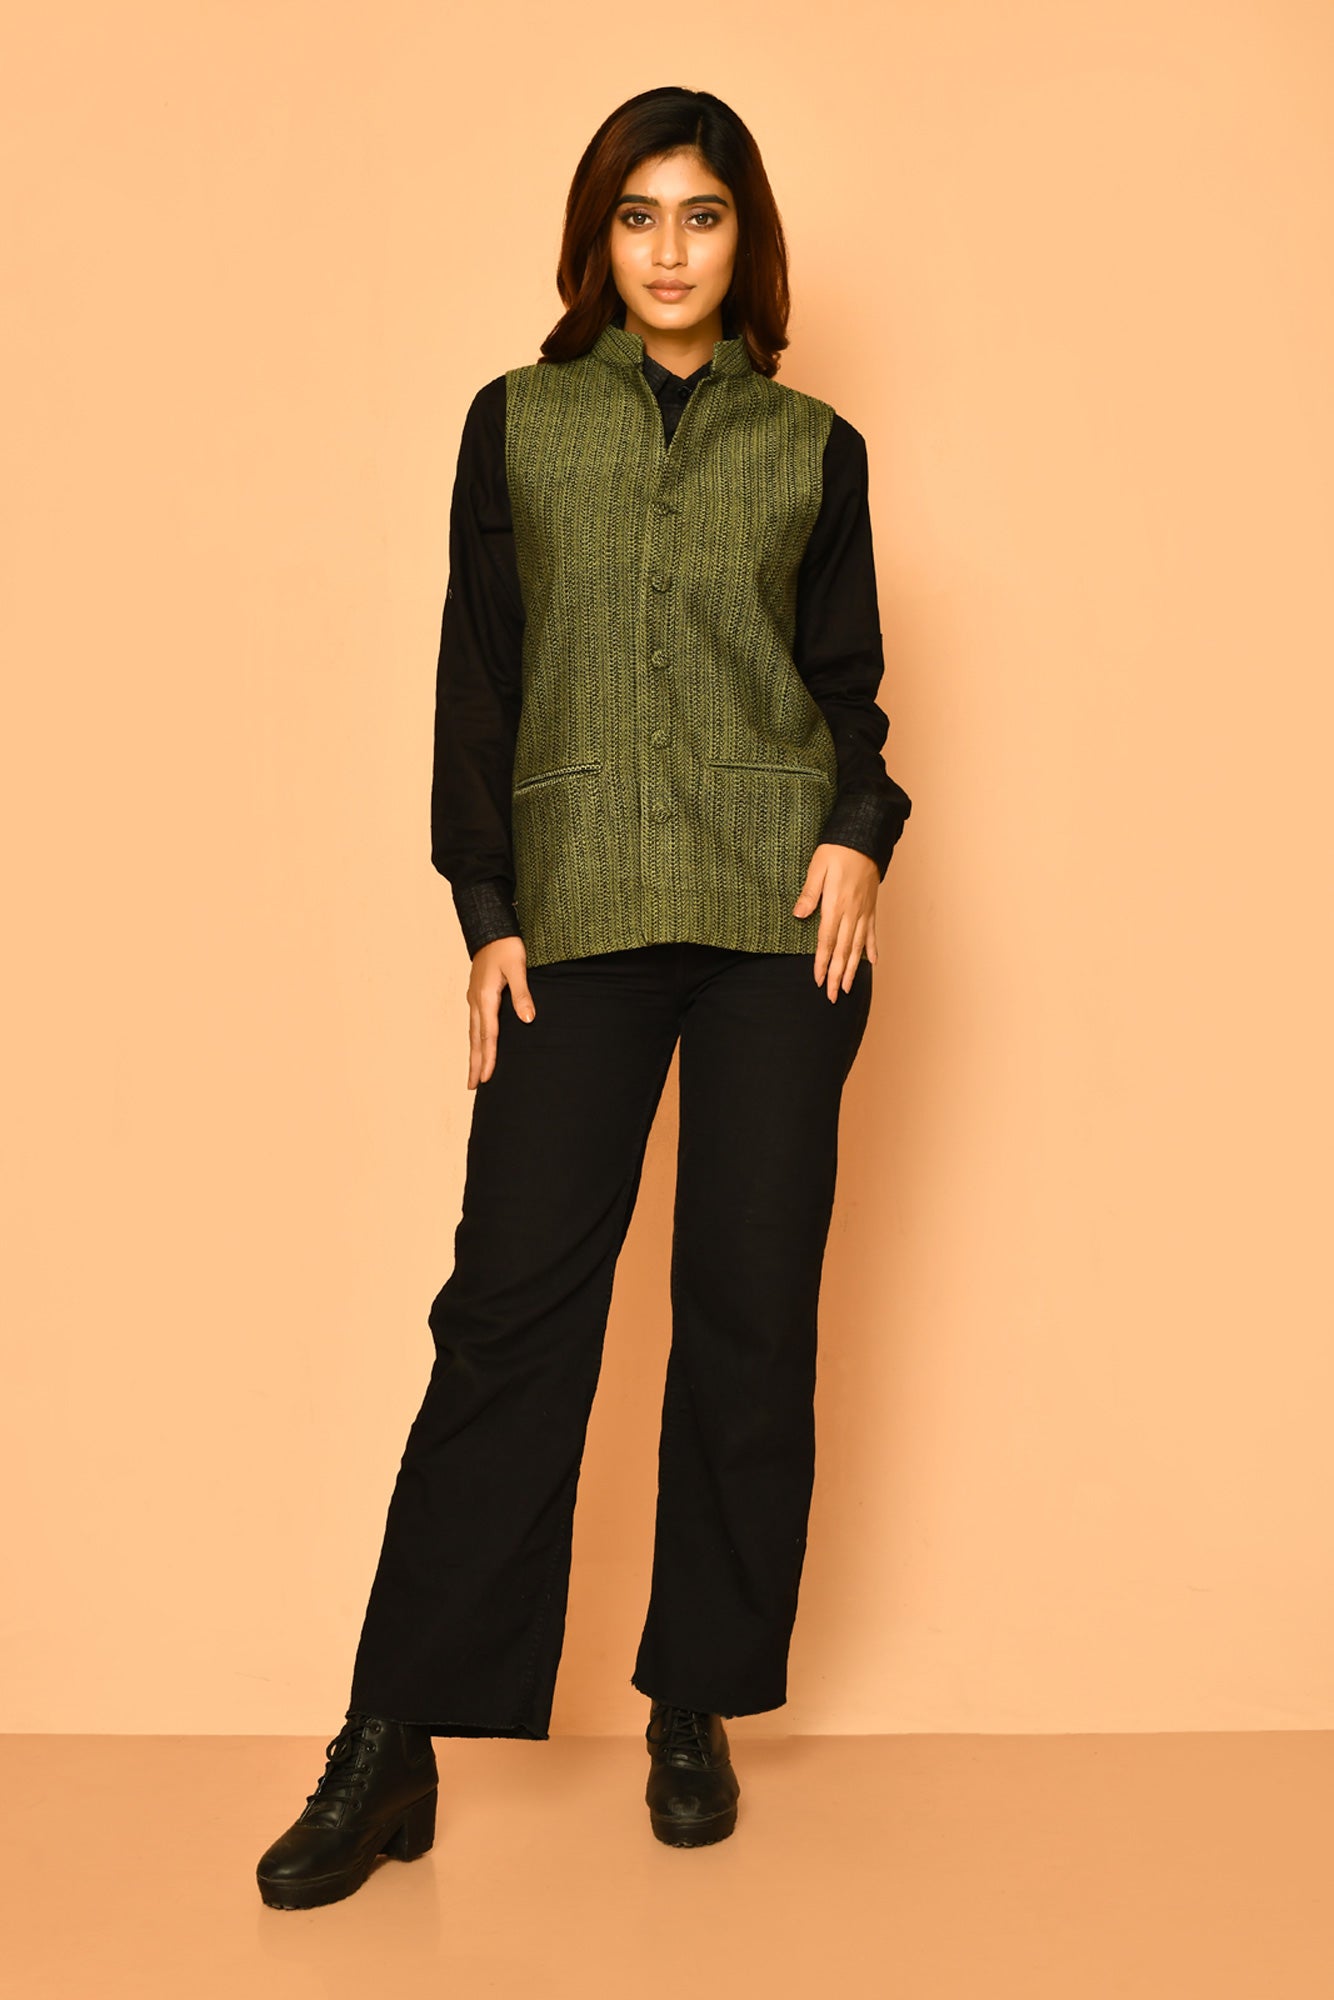 Buy best ladies handloom cotton Nehru jacket for women